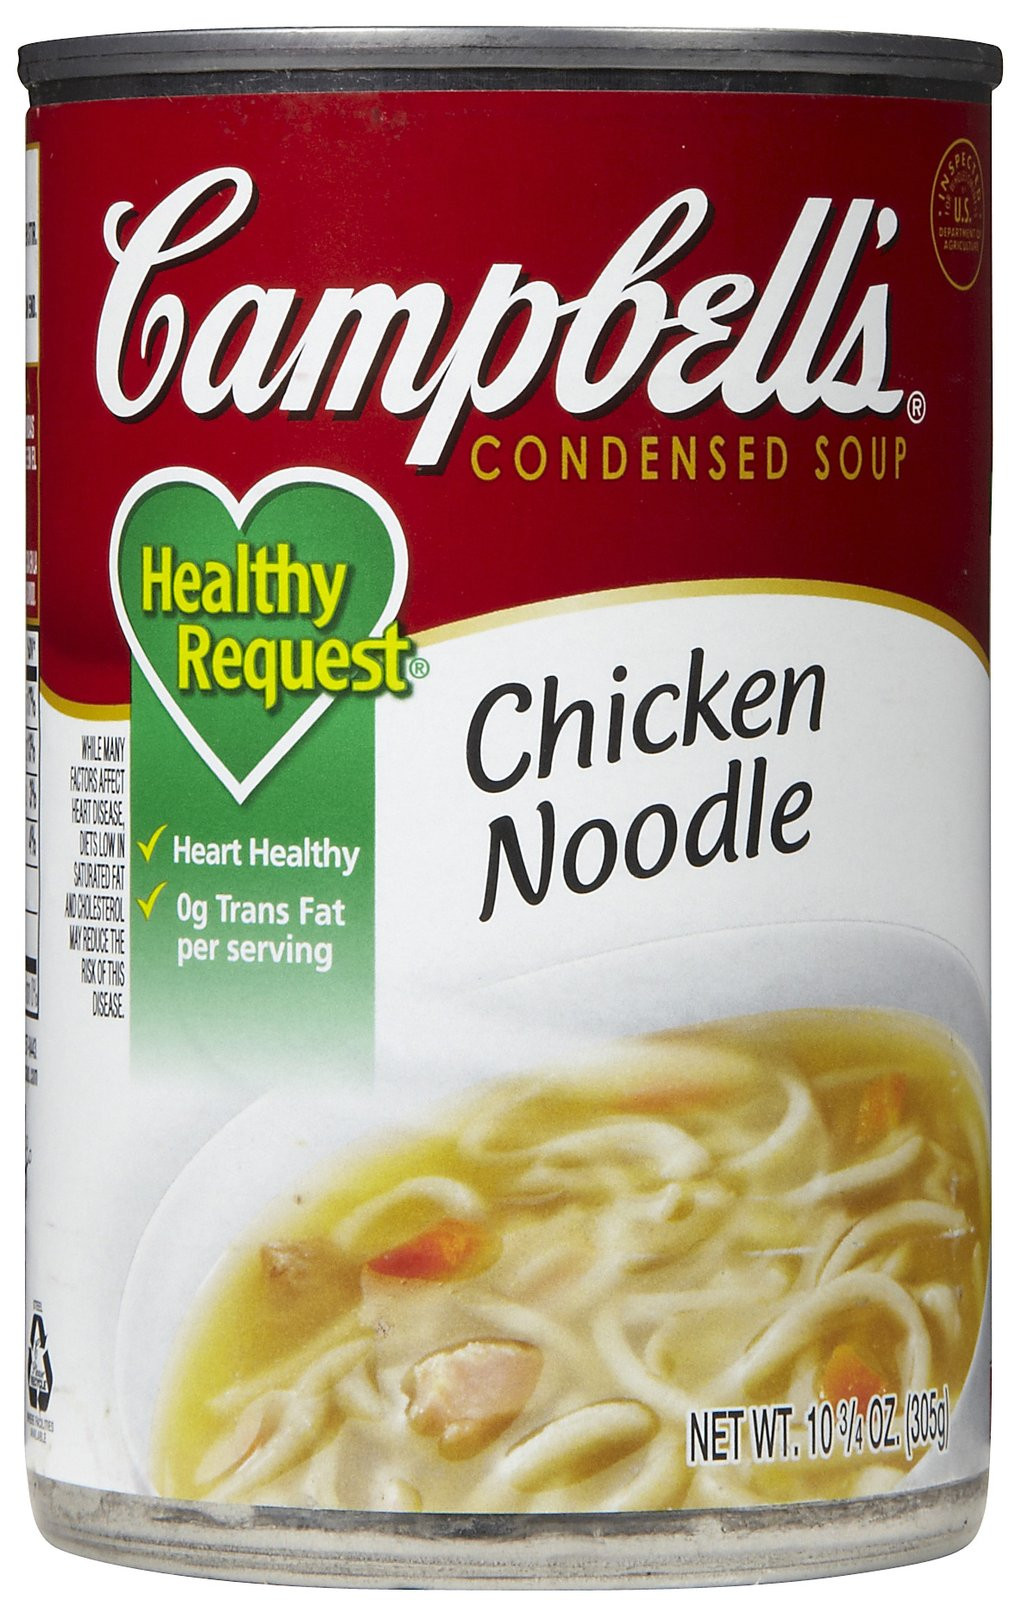 Campbells Chicken Noodle Soup
 Week Adjourned 8 16 13 Campbell s Soup LA Fitness